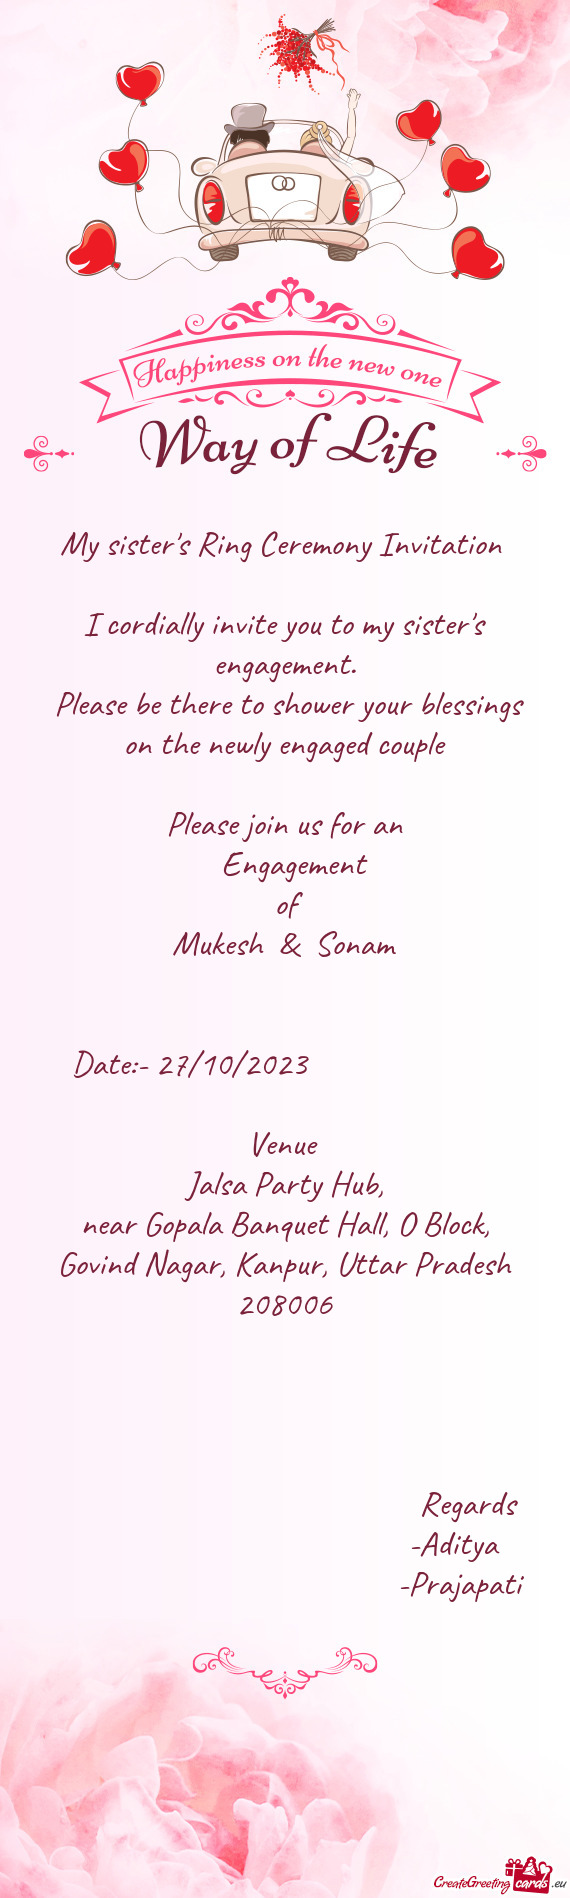 Jalsa Party Hub